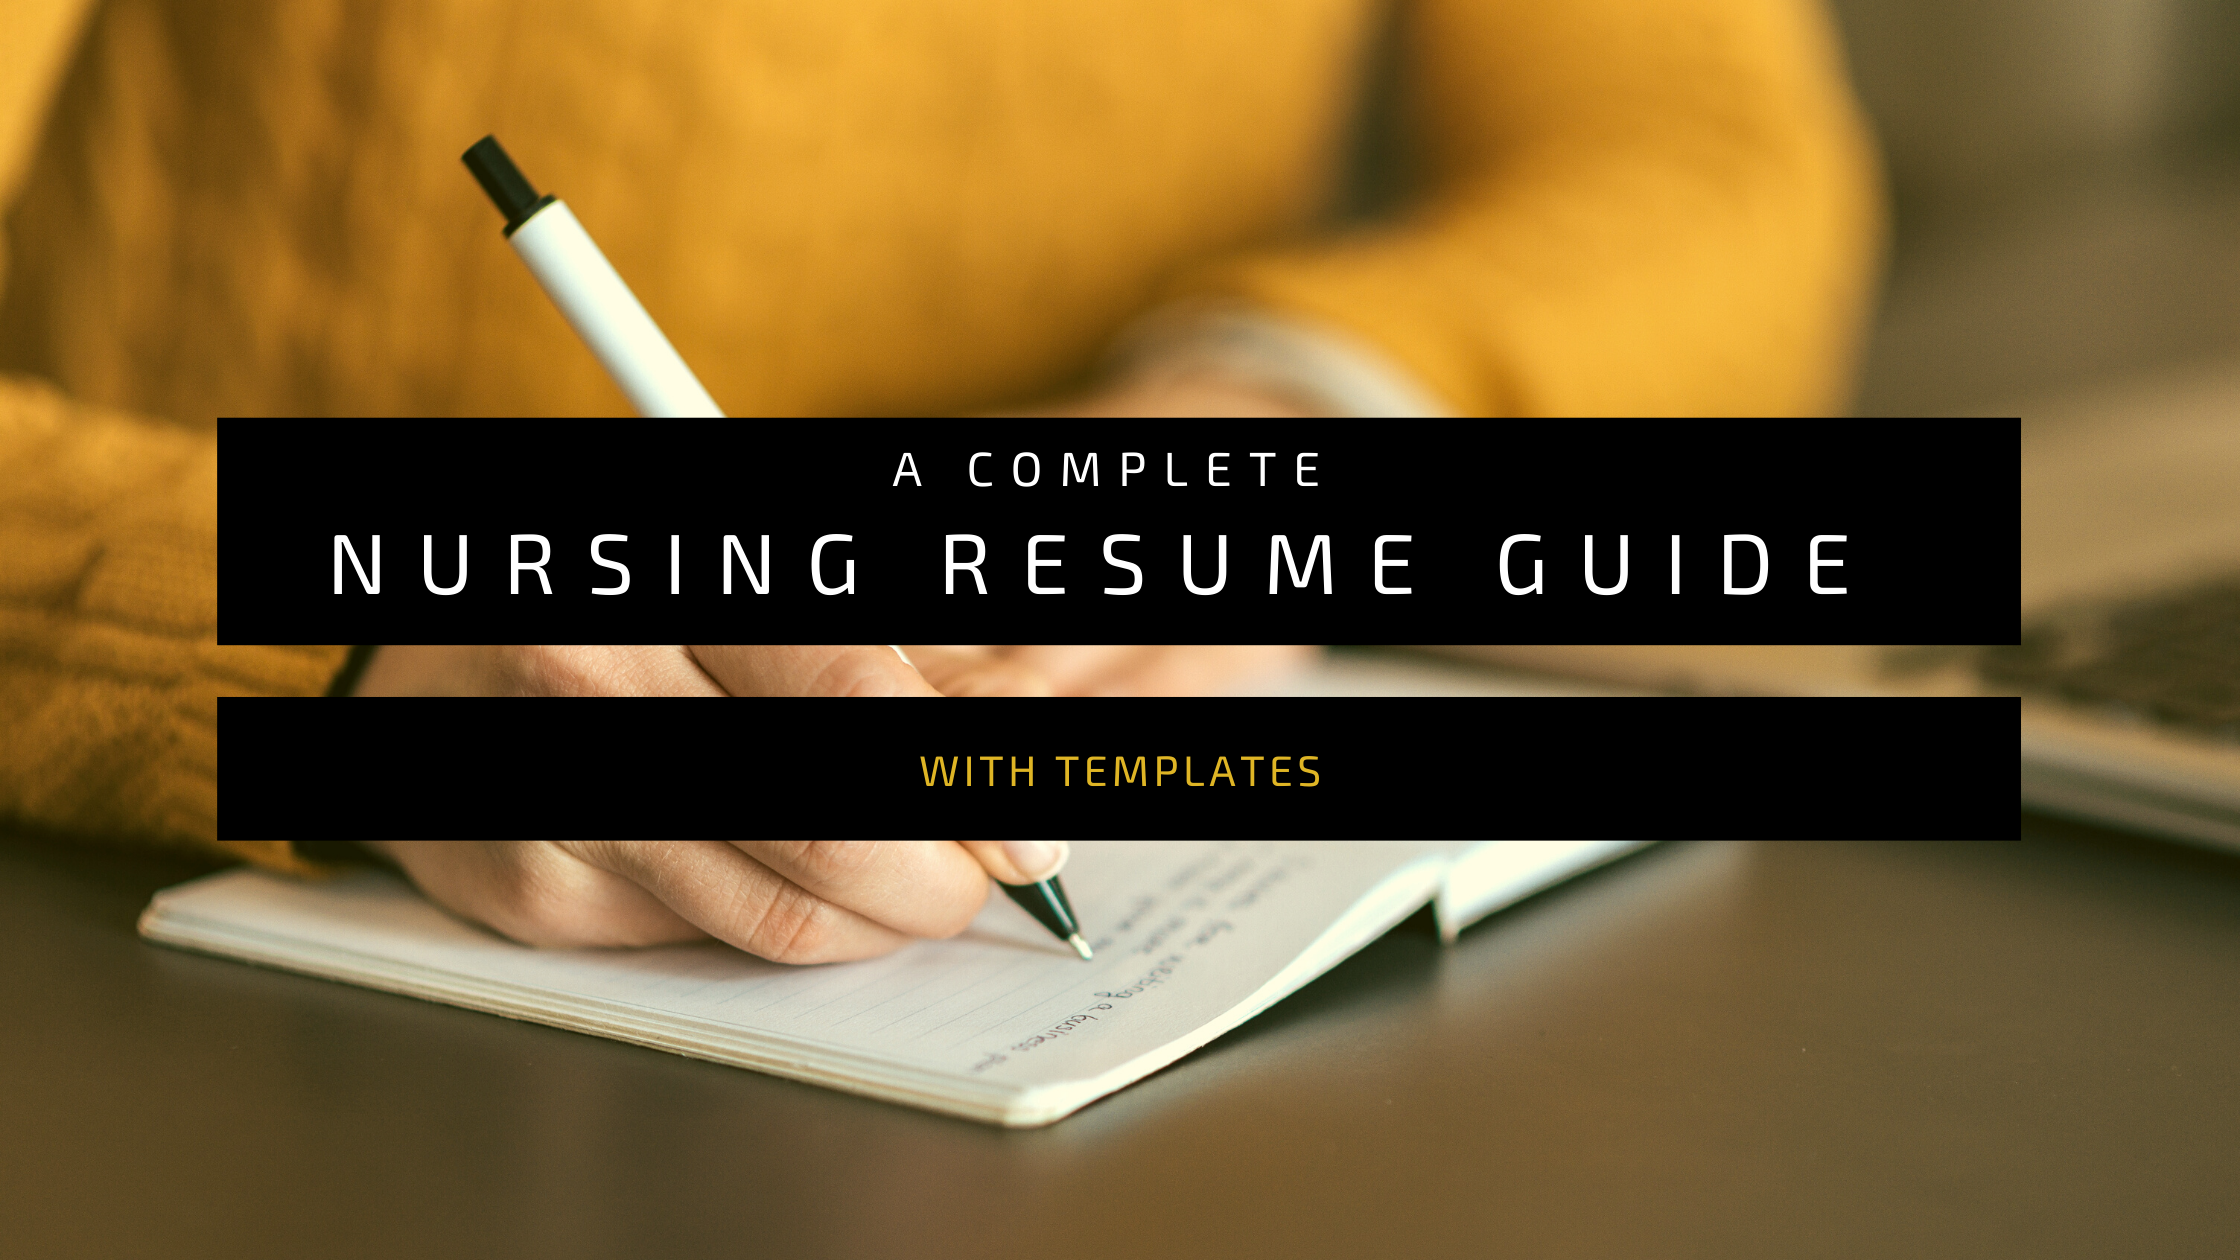 A Complete Nursing Resume Guide